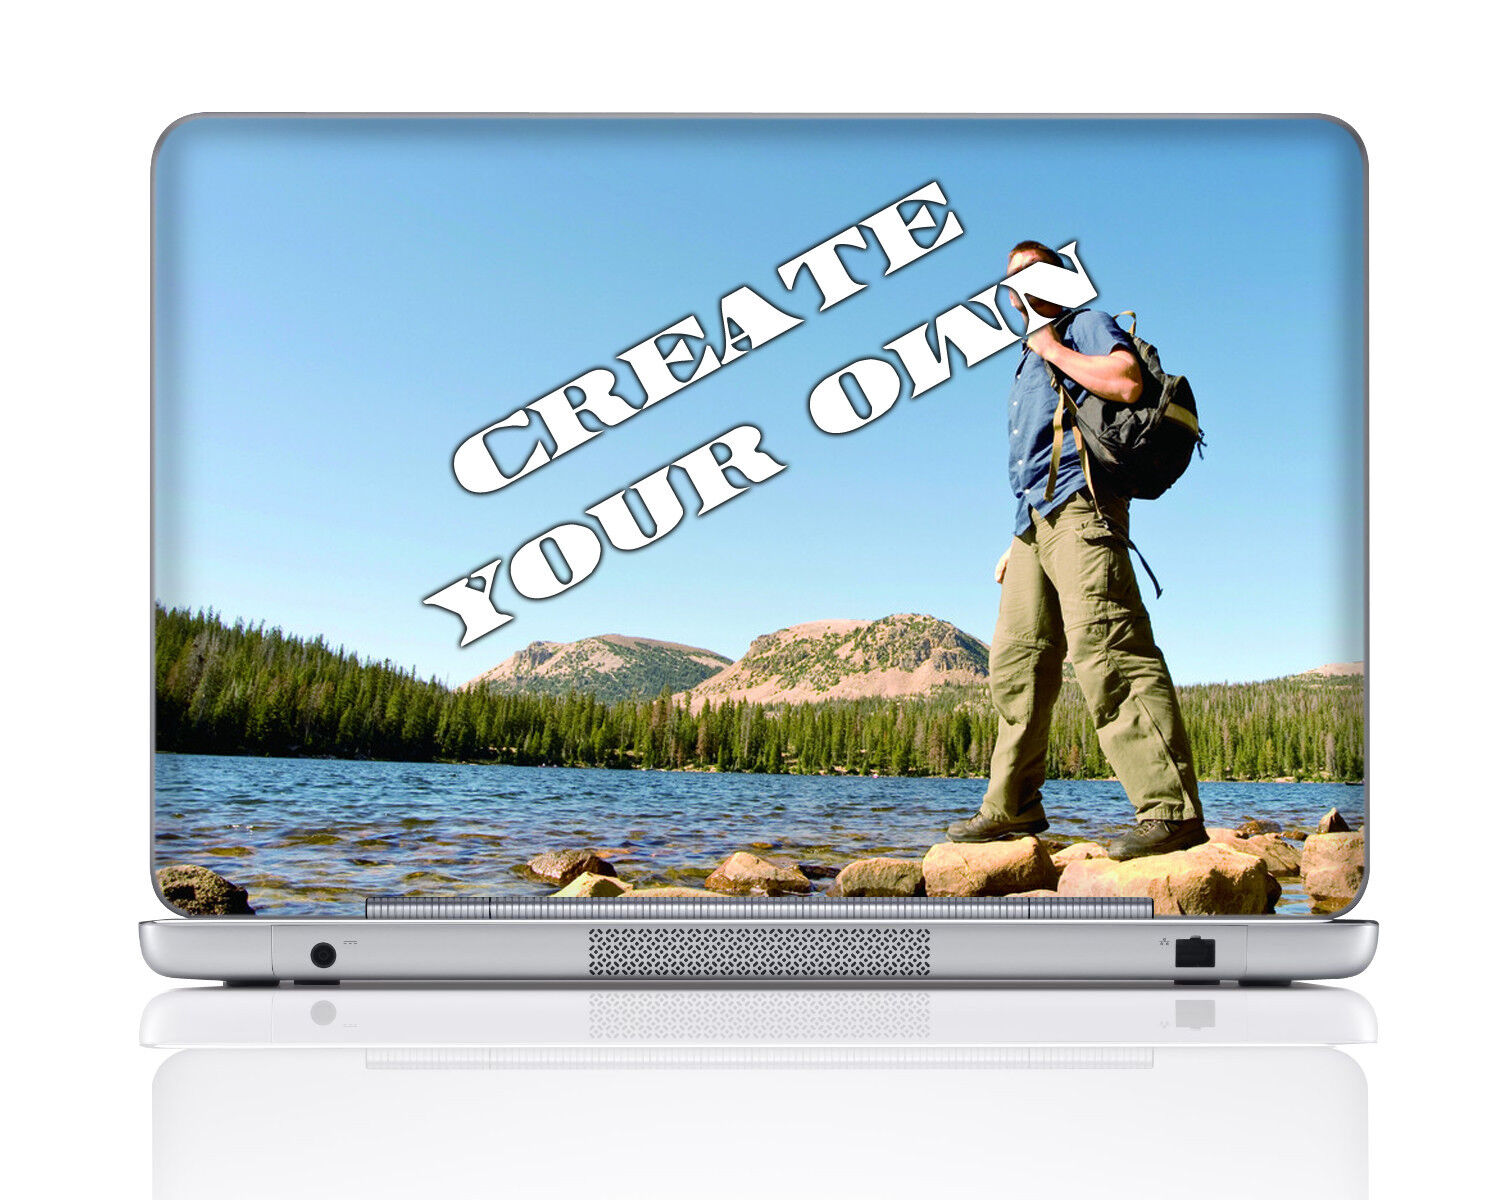 DJ Laptop Notebook Skin Sticker Decal Wallpaper w. Personalized Customized Image